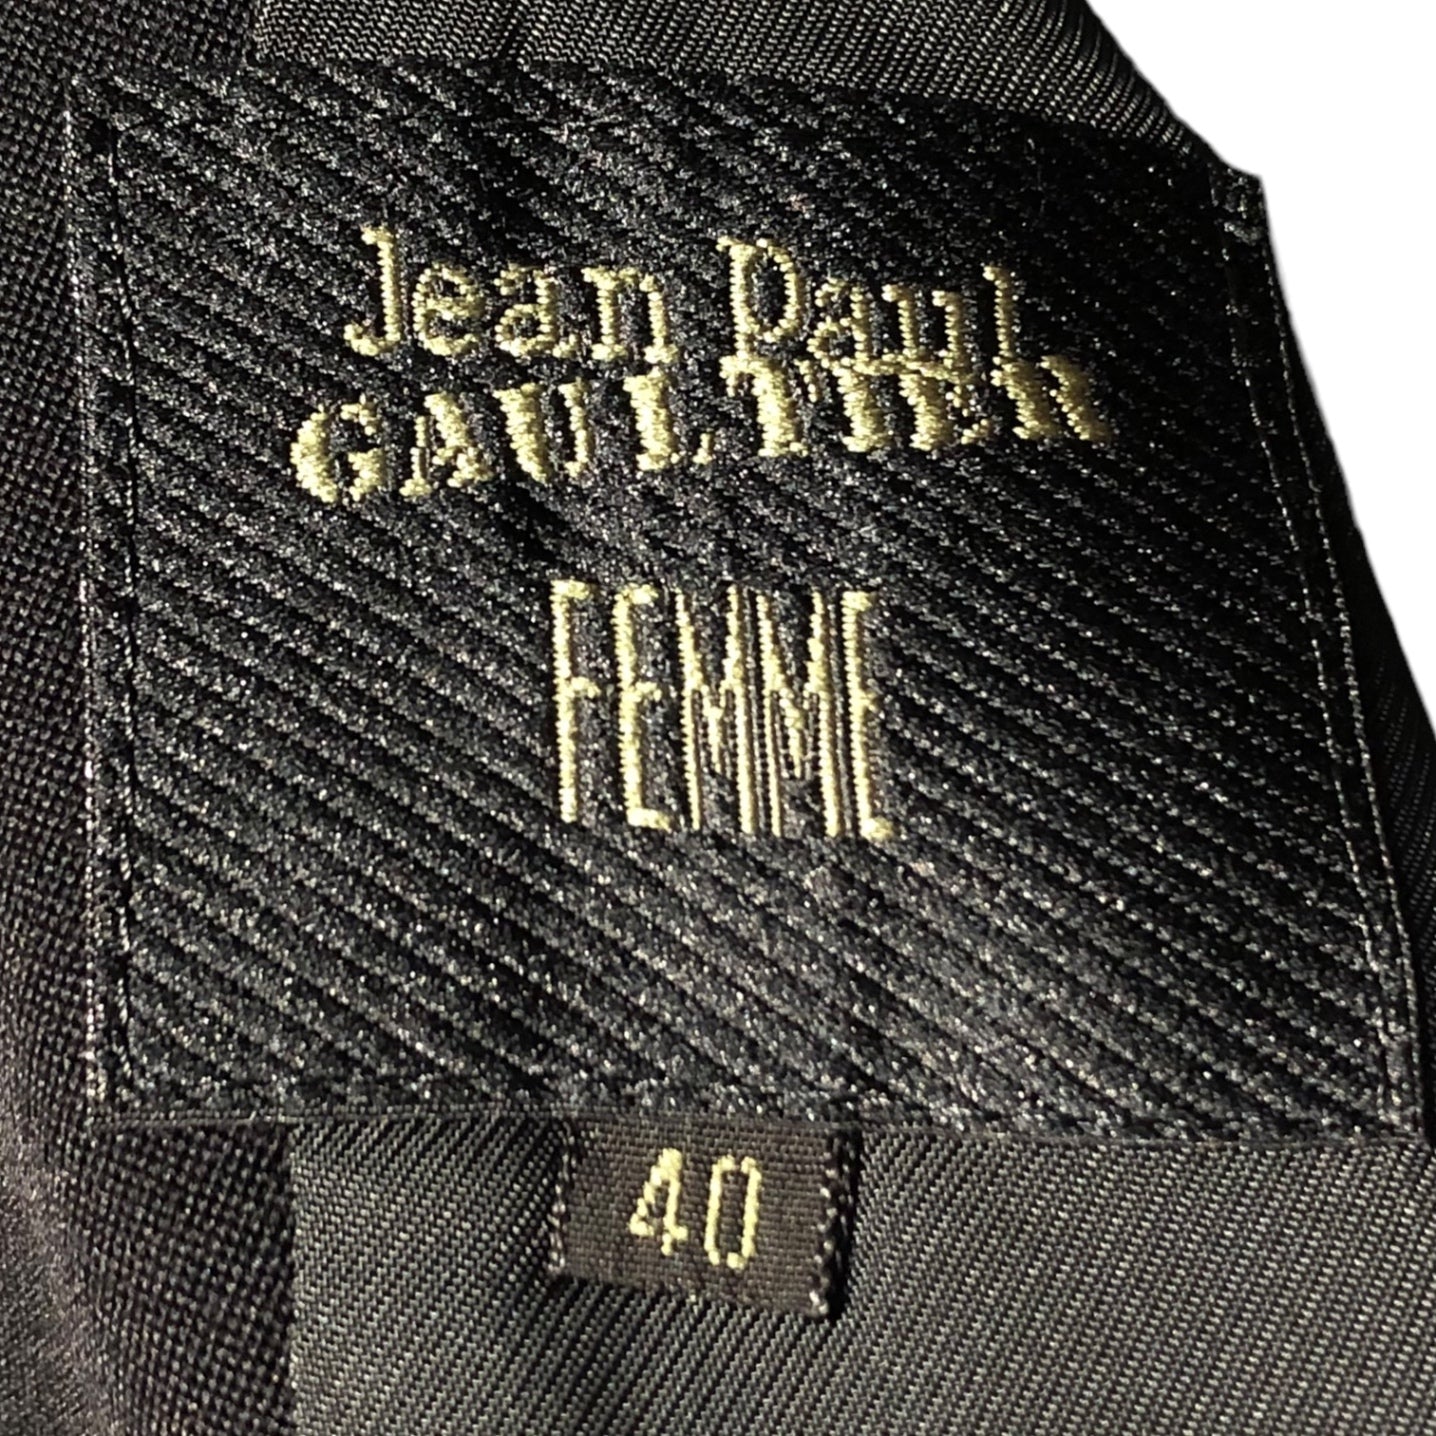 Jean Paul GAULTIER FEMME(ジャンポールゴルチエファム) 90's Big lapel design double j